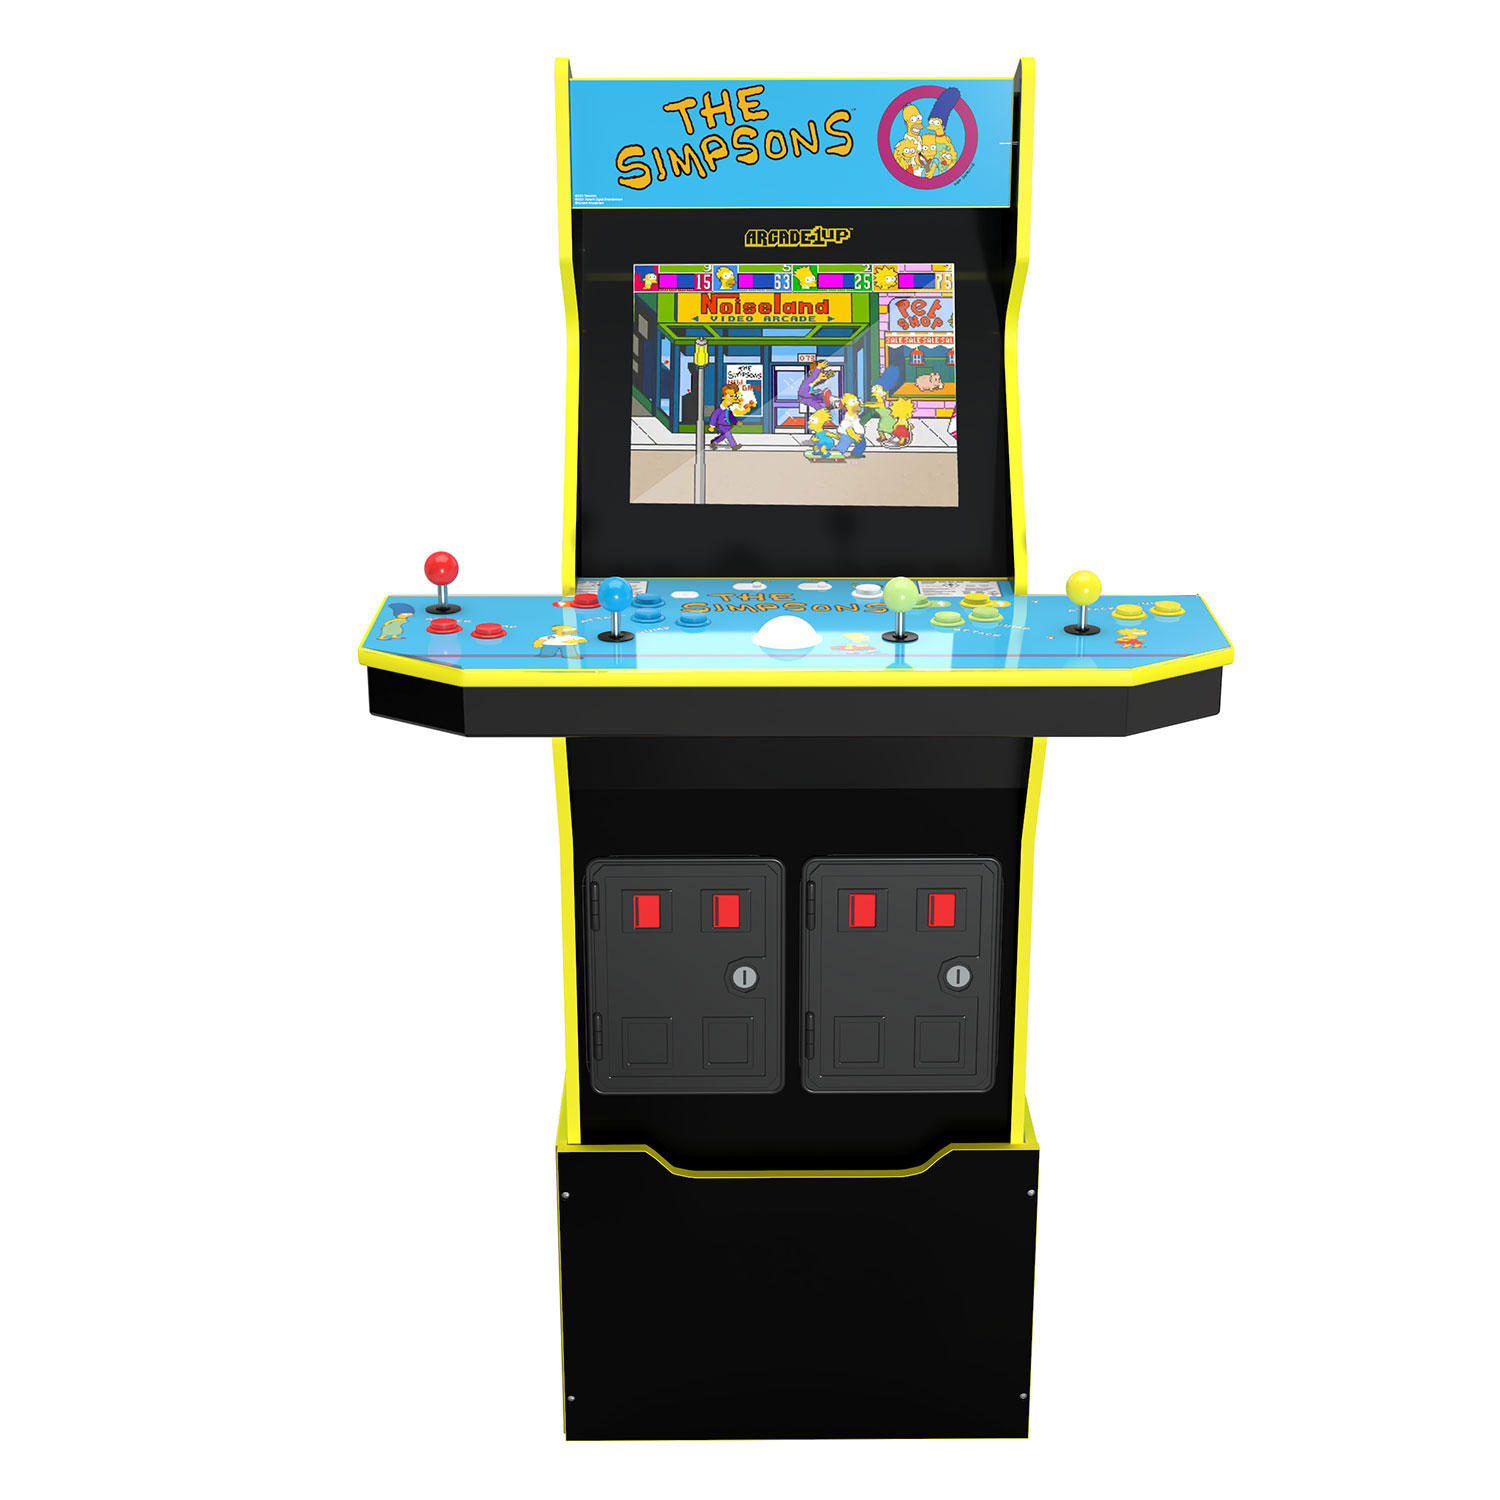 Simpsons Arcade Arcade 1UP 2021 2 in 1 Games (SIM-A-10169)